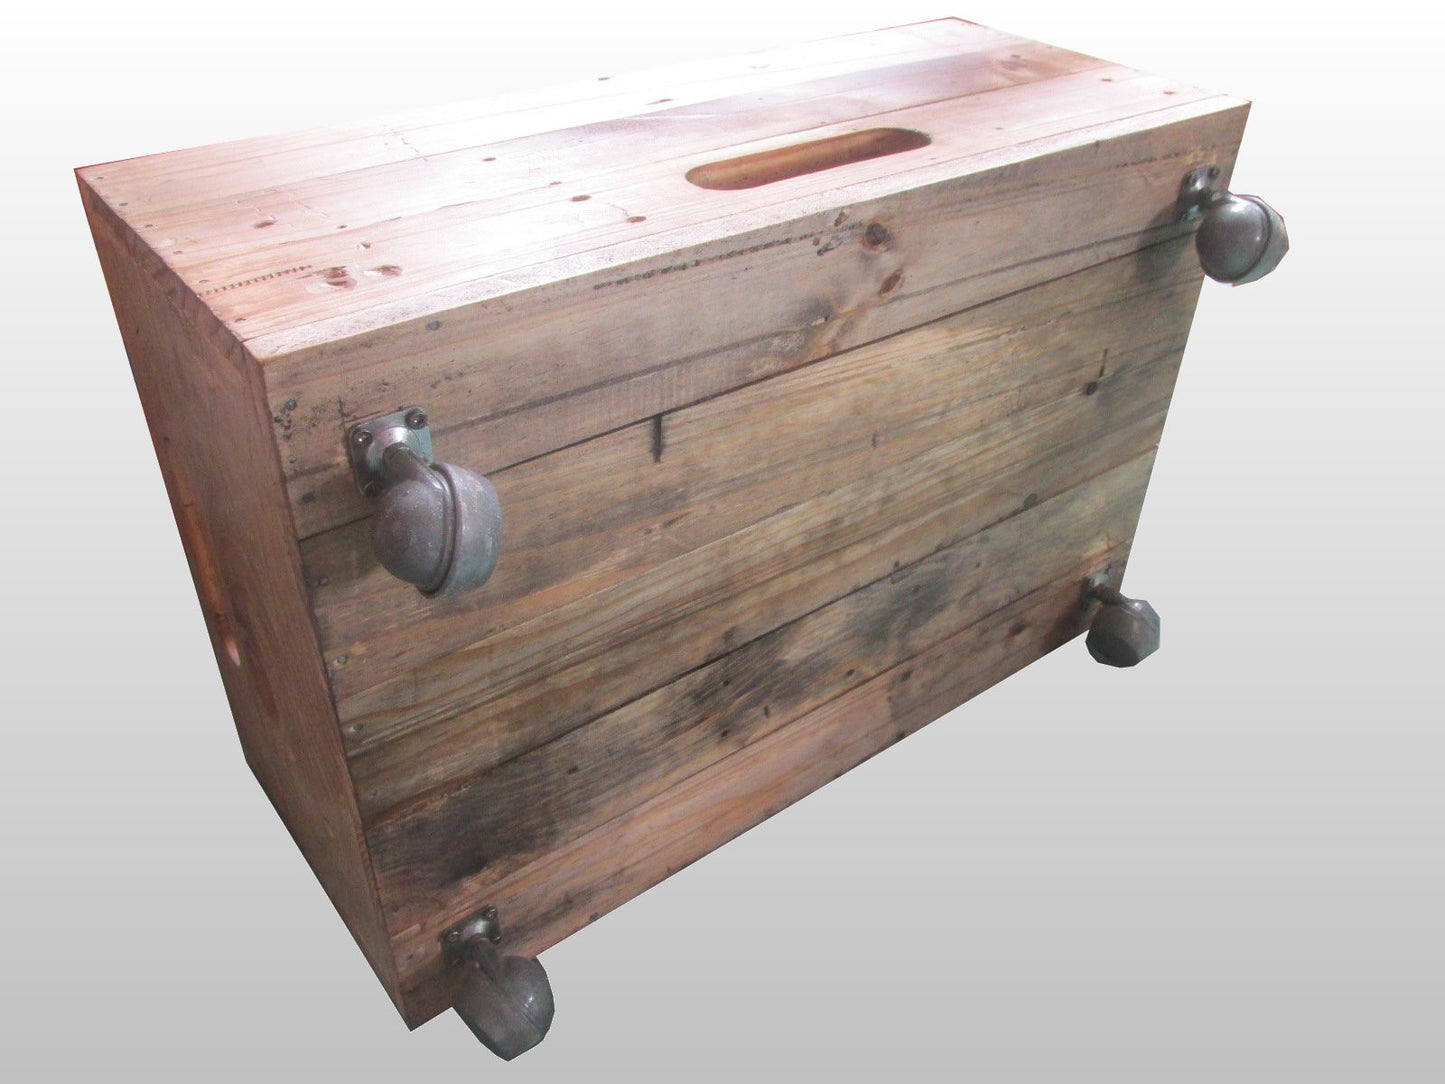 Antiqued Crate with Castors